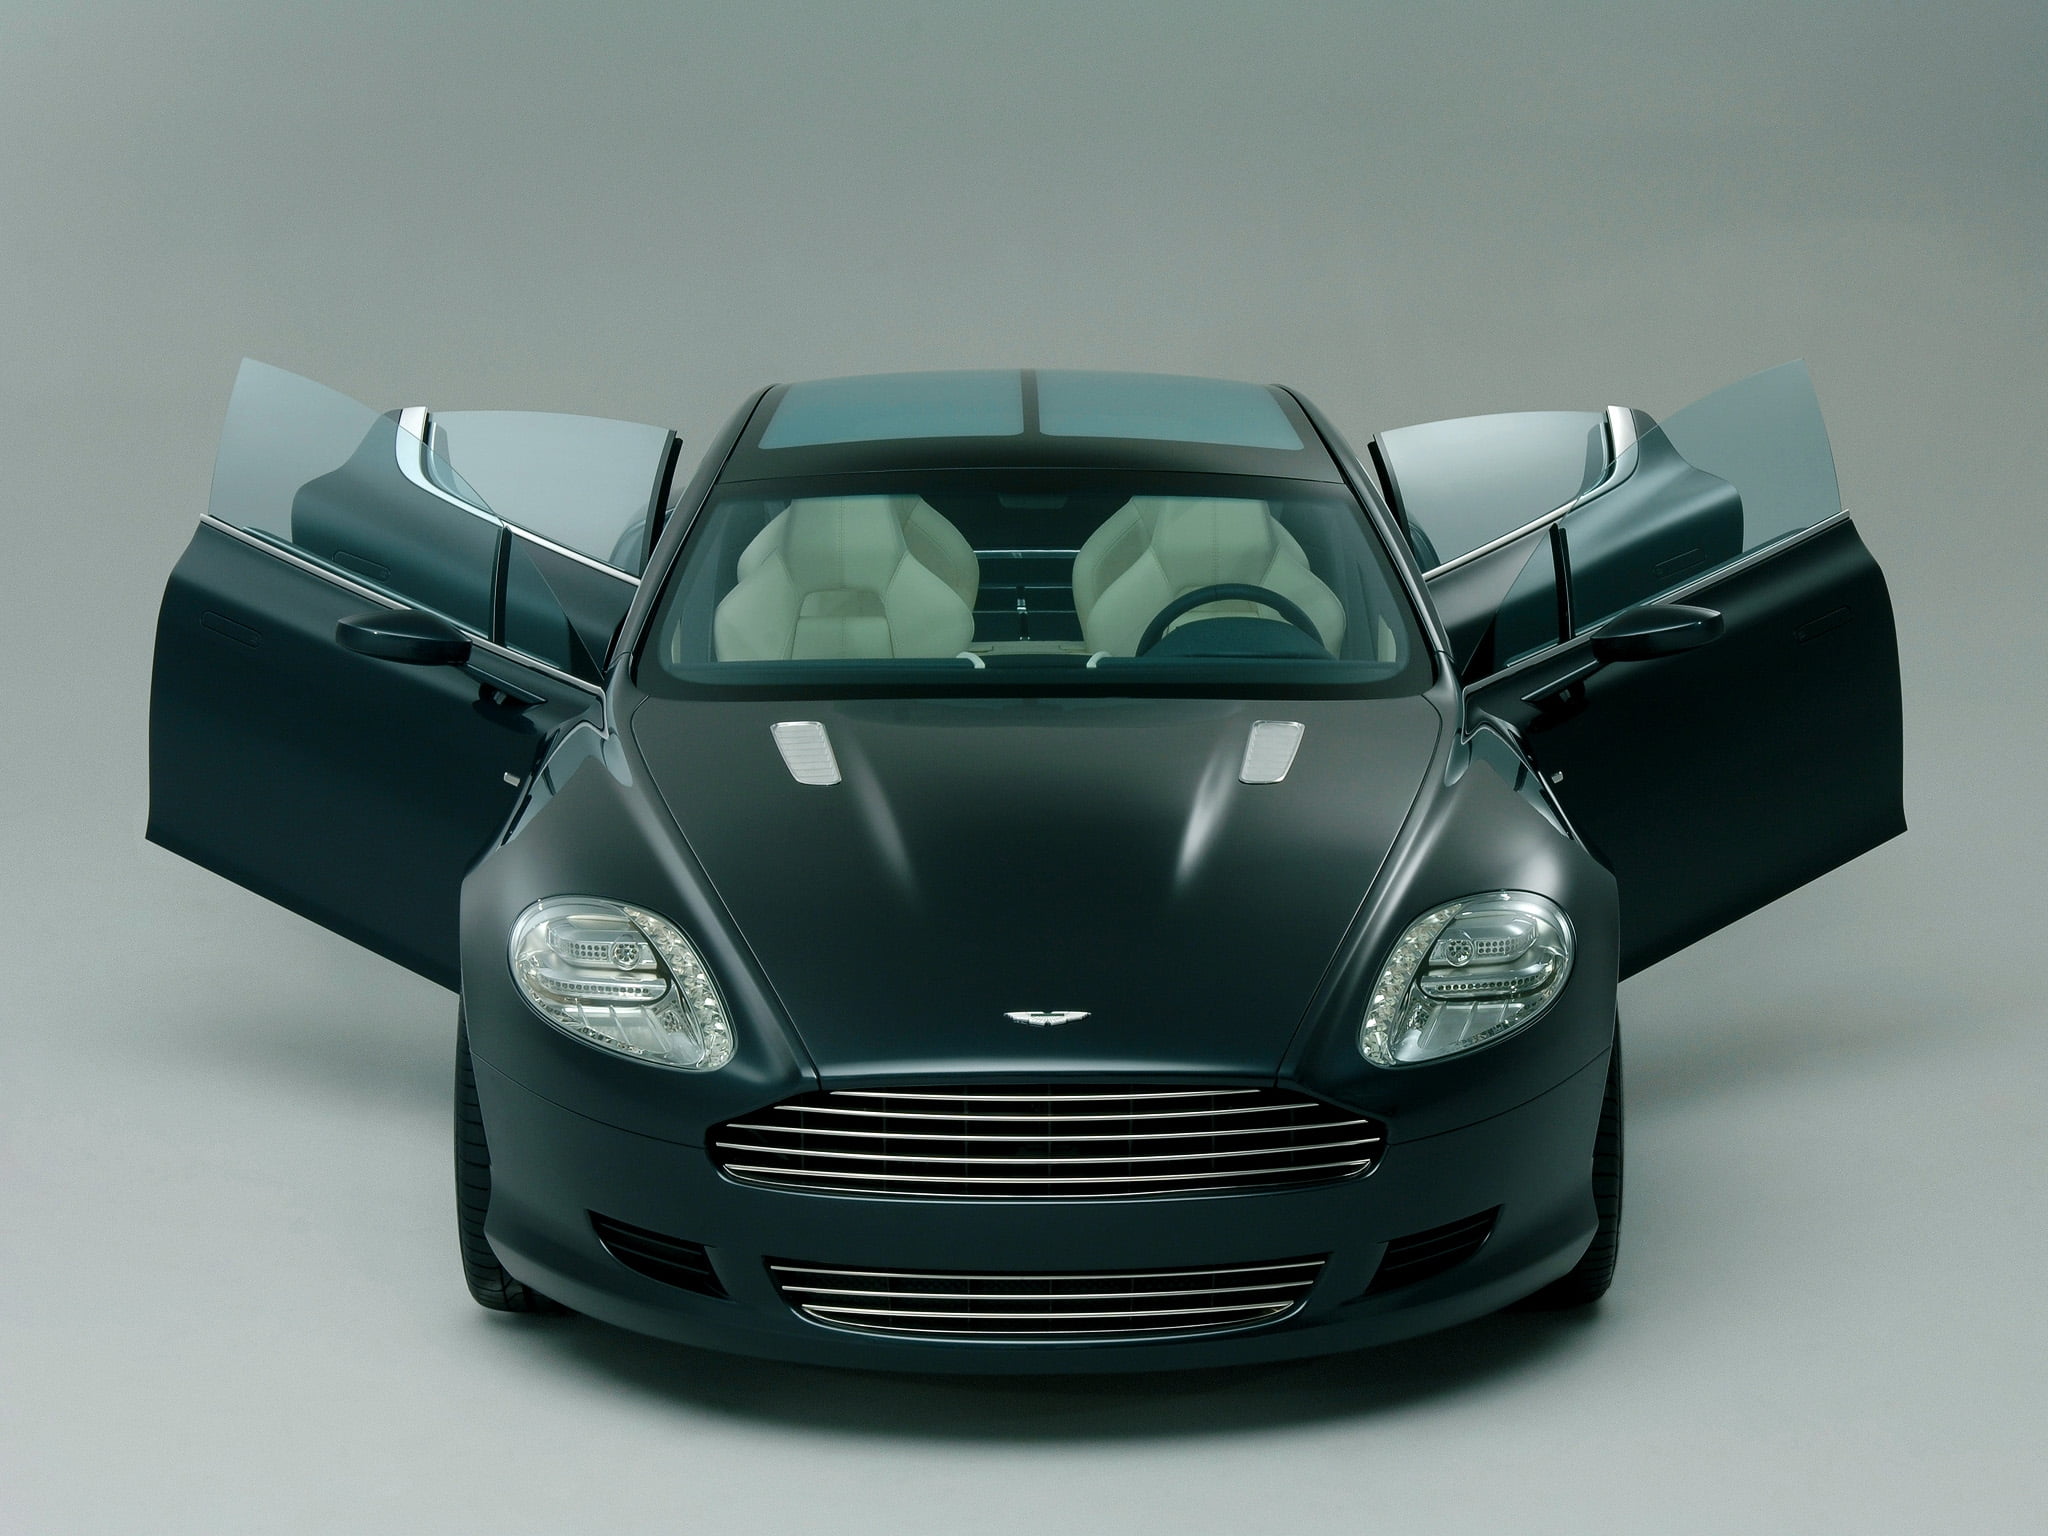 black Aston Martin DBHS, rapide, 2006, concept car, sport, land Vehicle